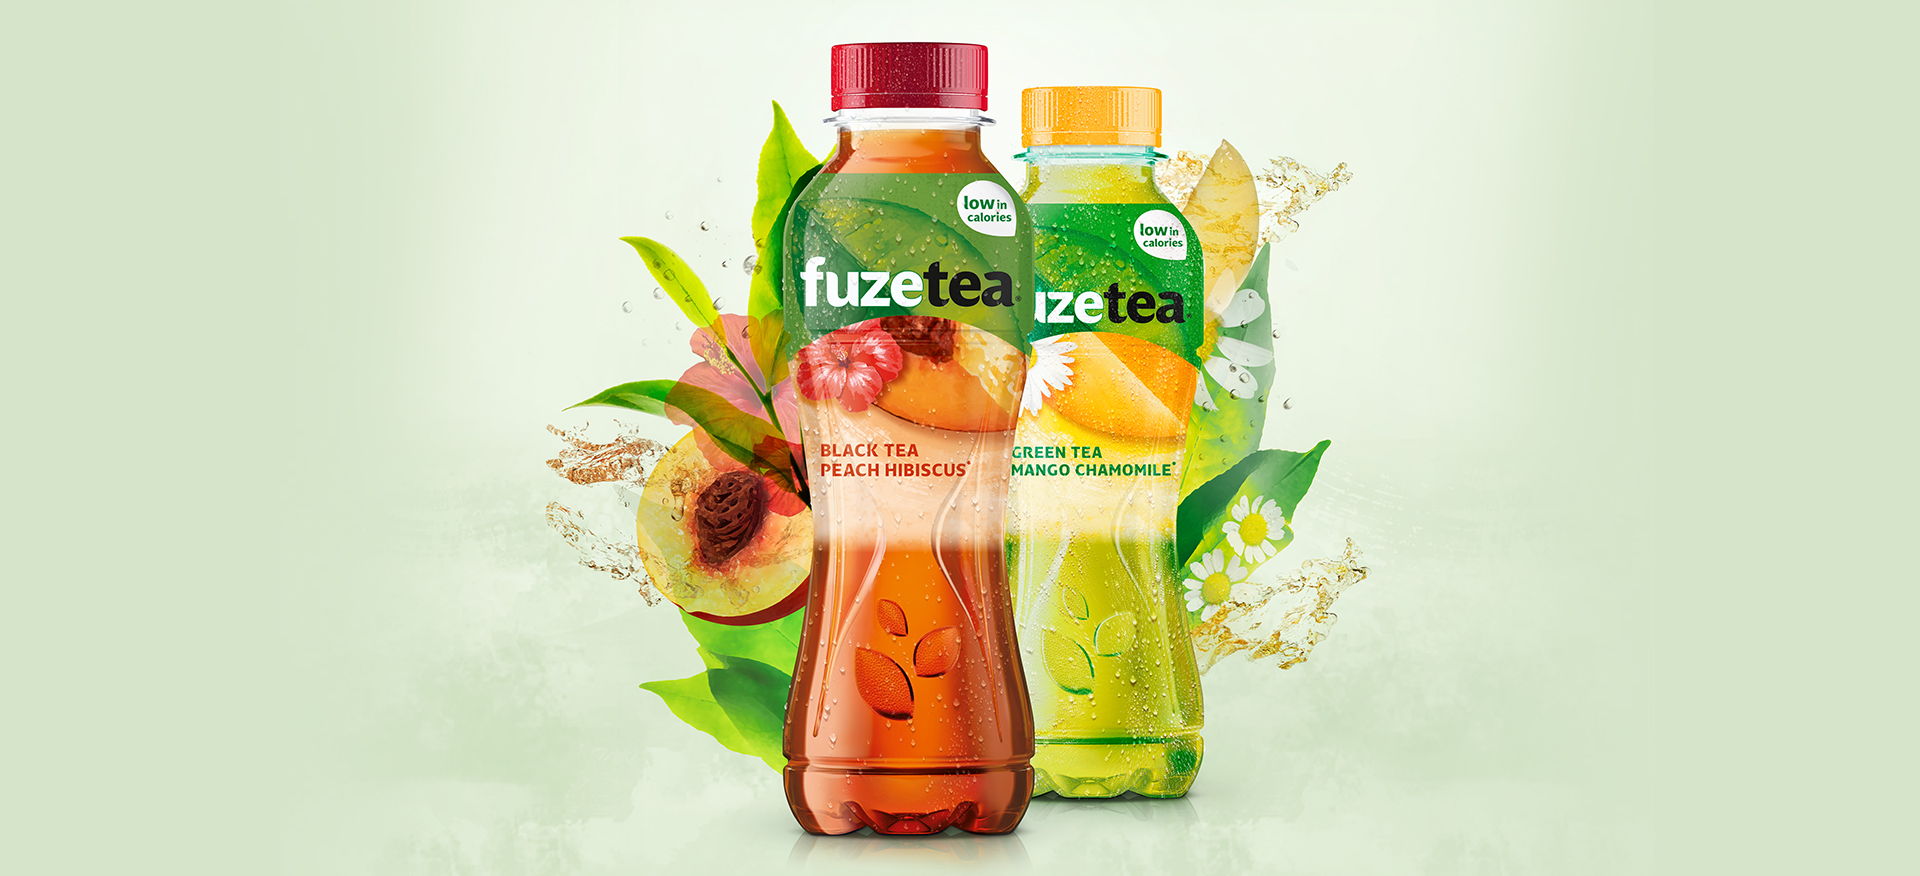 Air sips on Coca-Cola's new Fuze Tea.